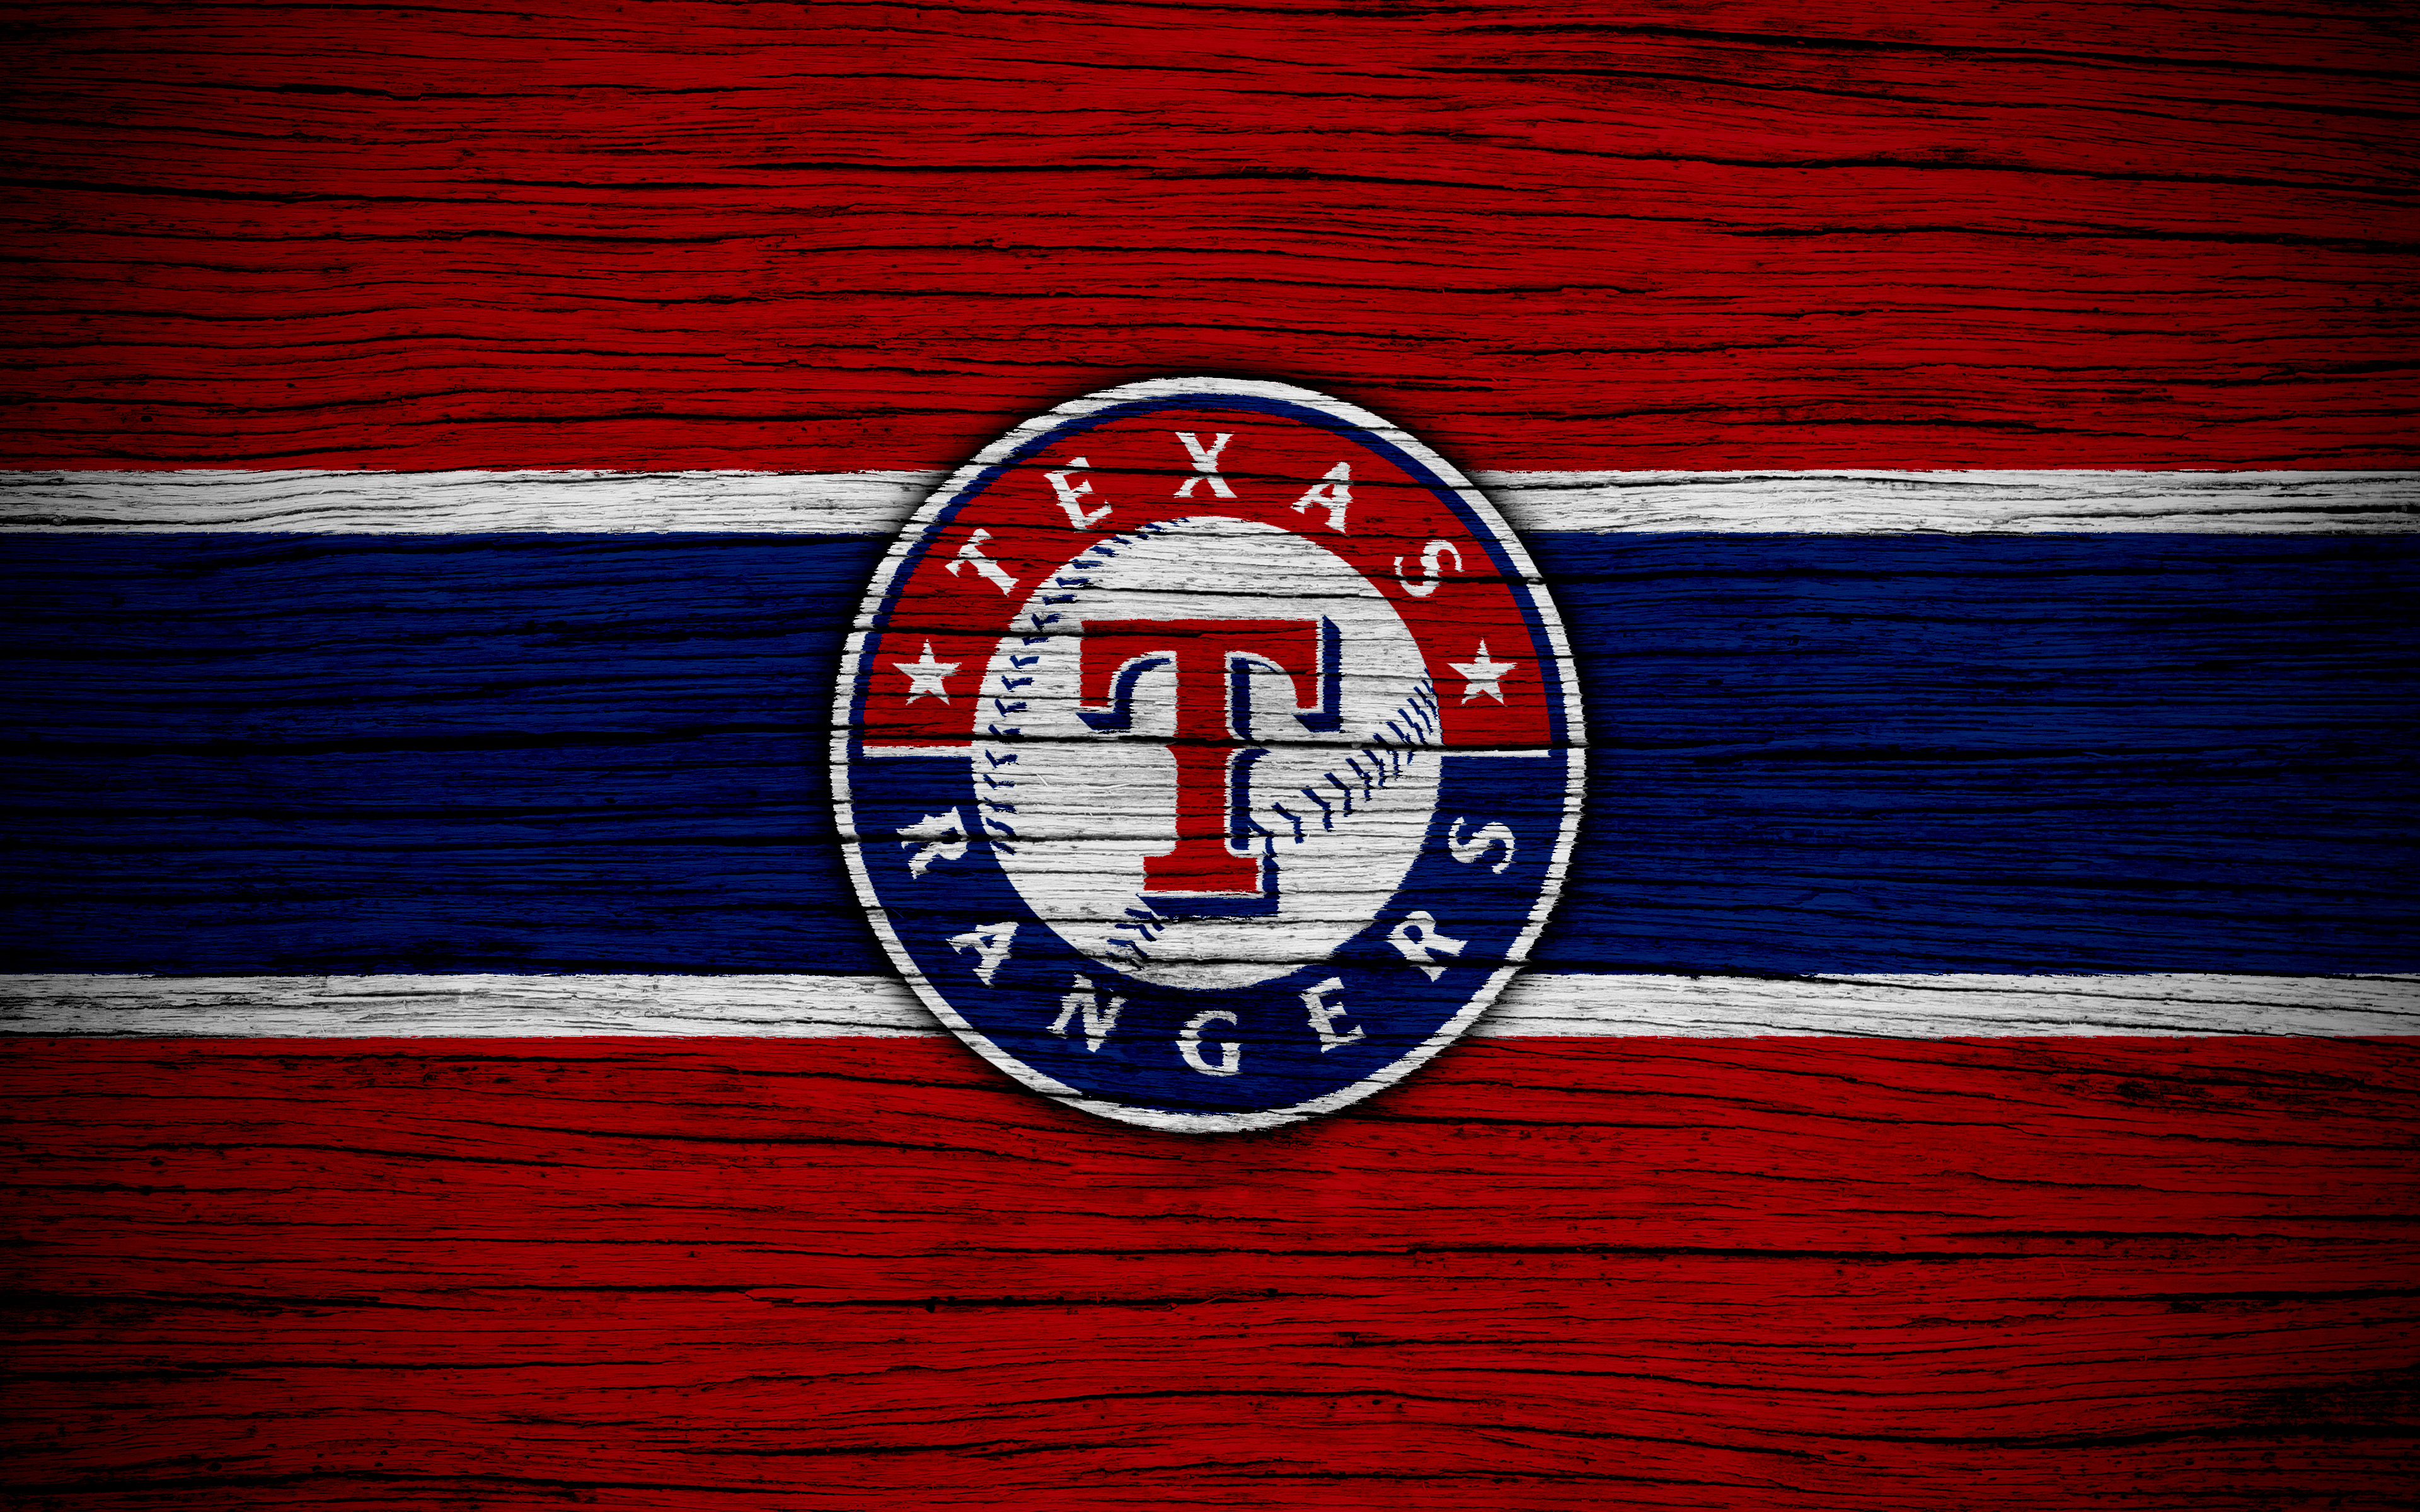 Texas Rangers 4k Ultra HD Wallpaper Background Image